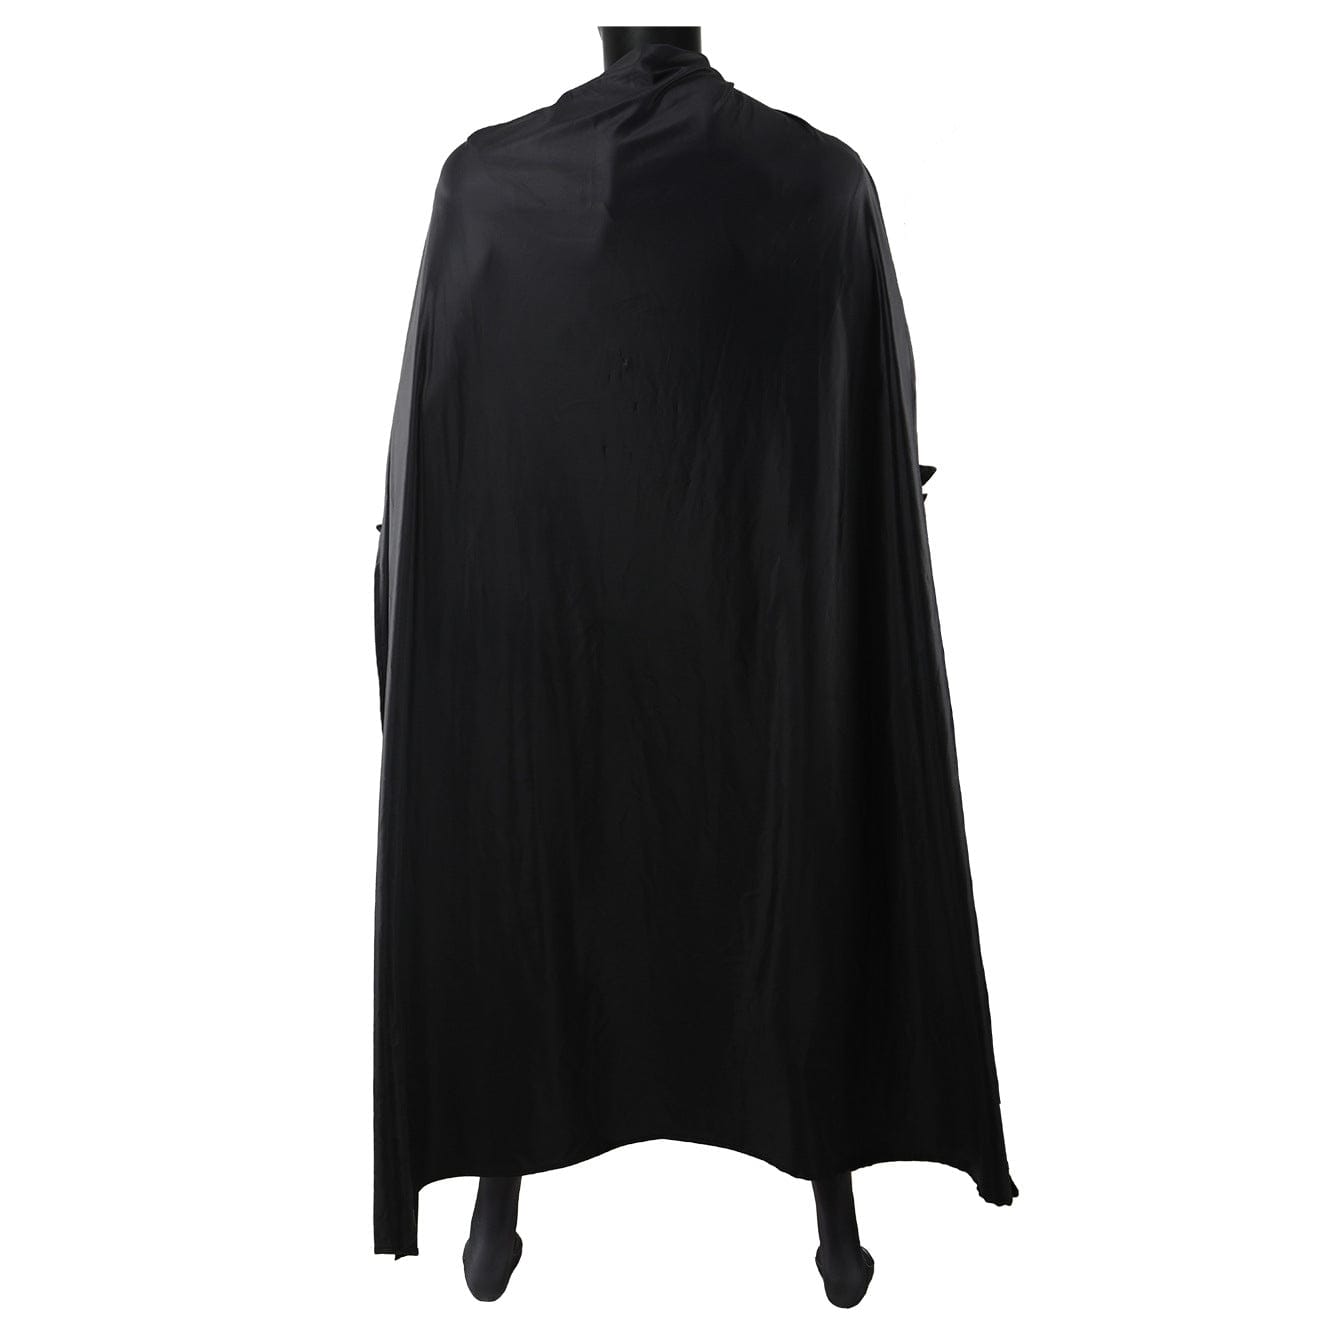 Flashopoint Batman Knight Of Vengeance Thomas Wayne Jumpsuits Adult Costume